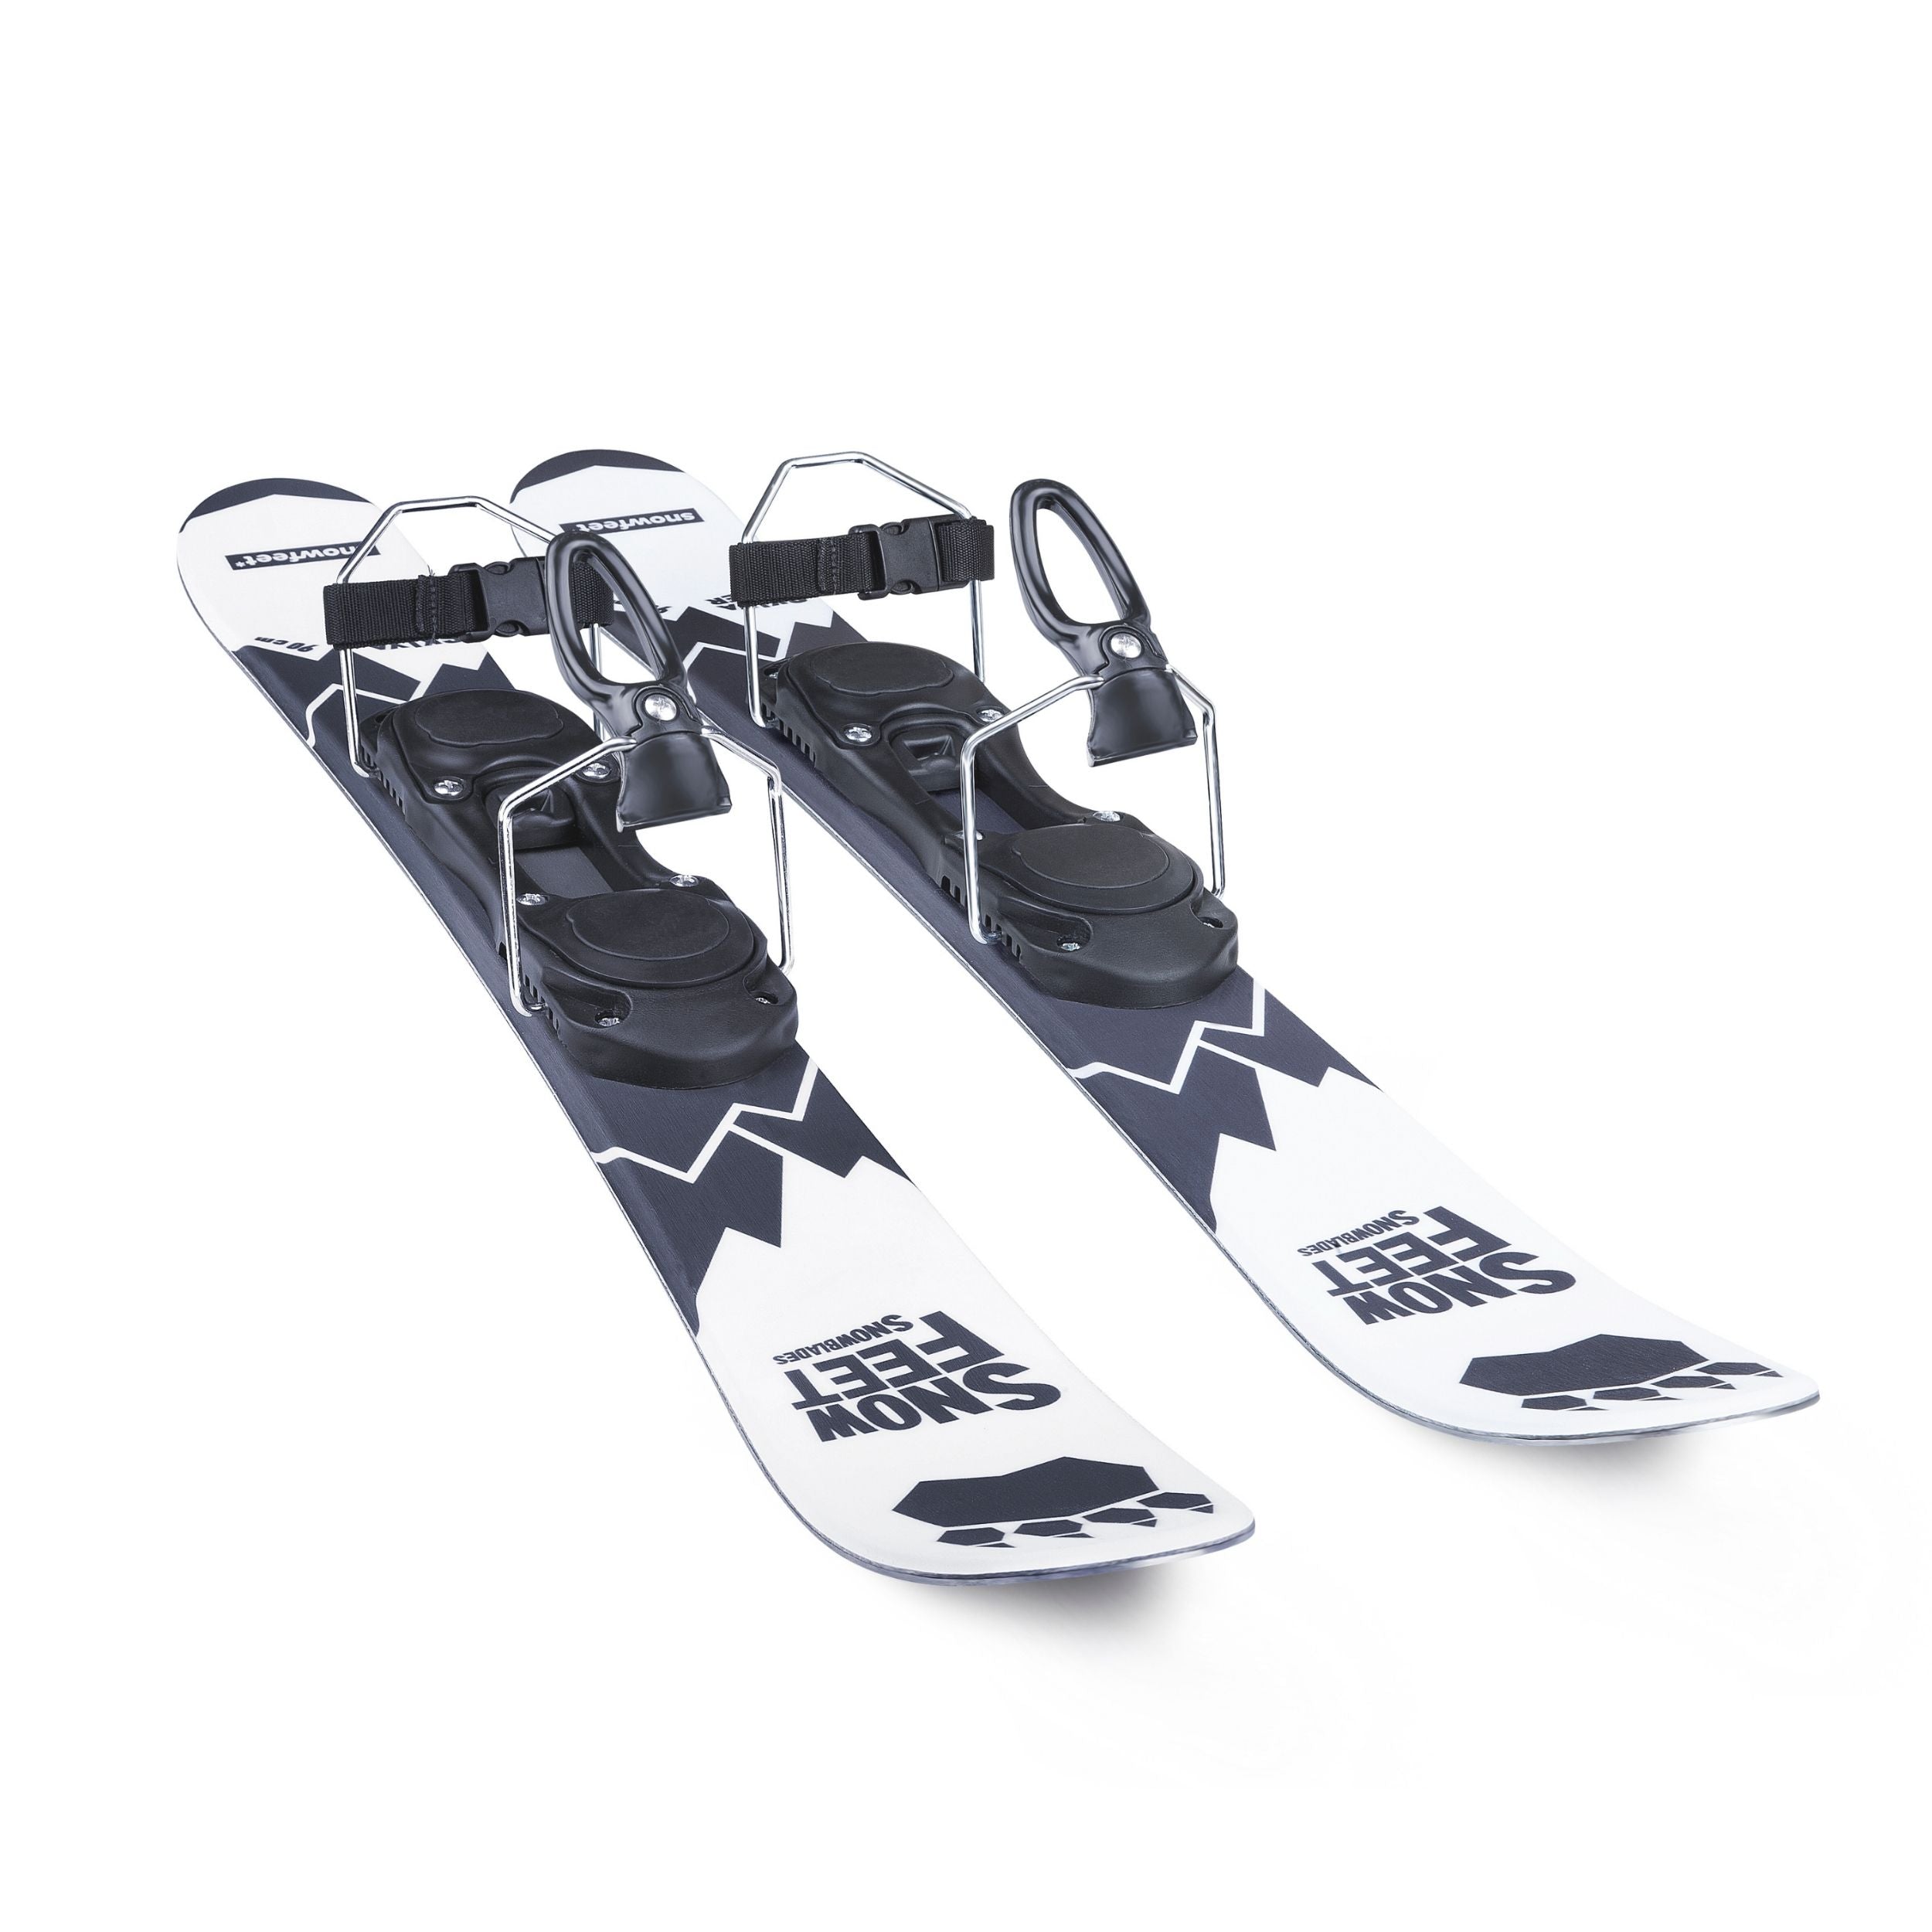 snowblades-skiboards-90cm-snowfeet-short-ski-ski boots-snowboard-boots